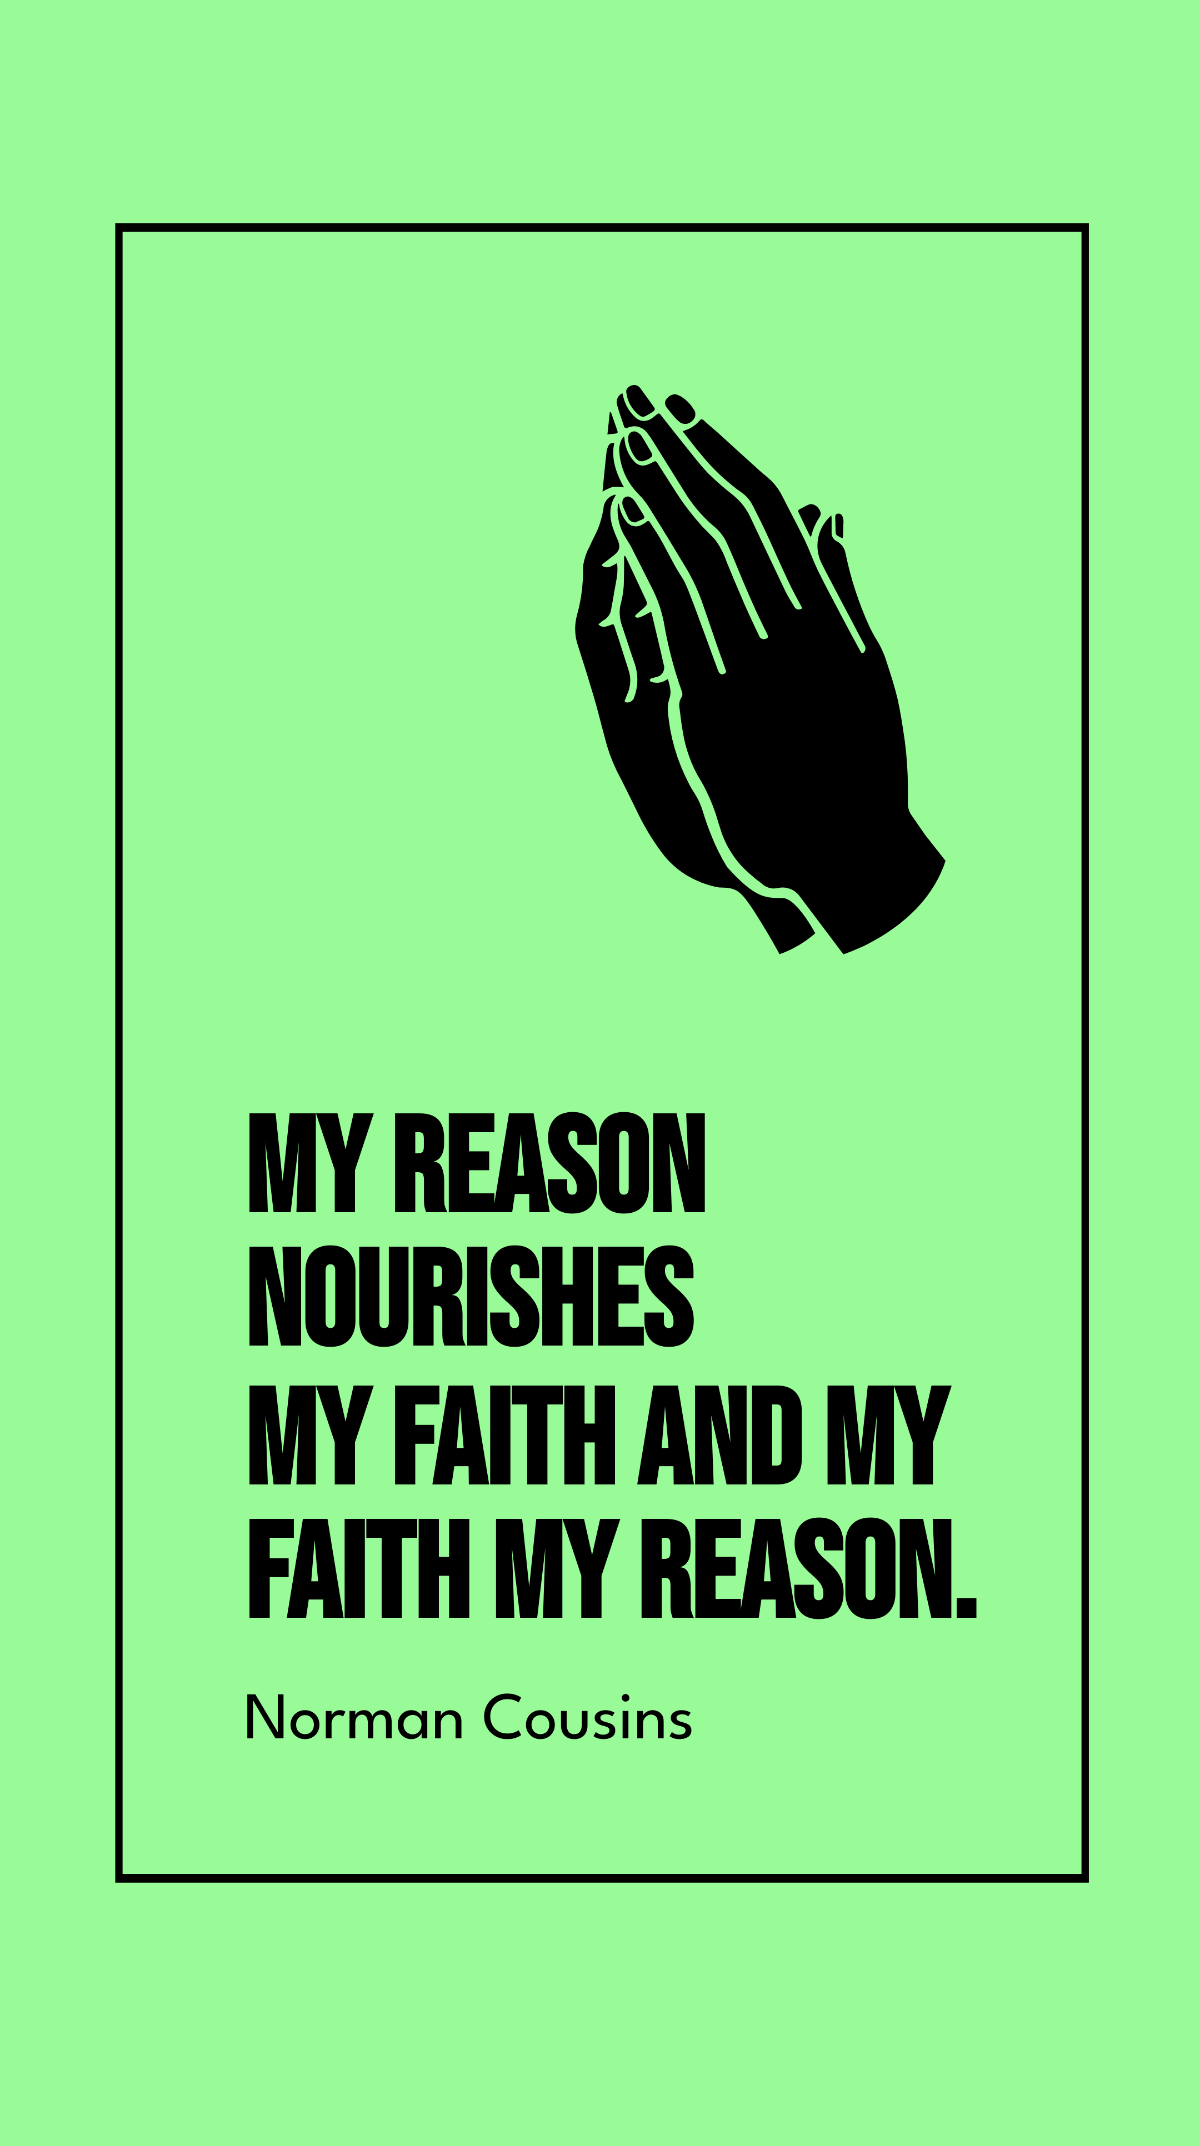 Norman Cousins - My reason nourishes my faith and my faith my reason. Template